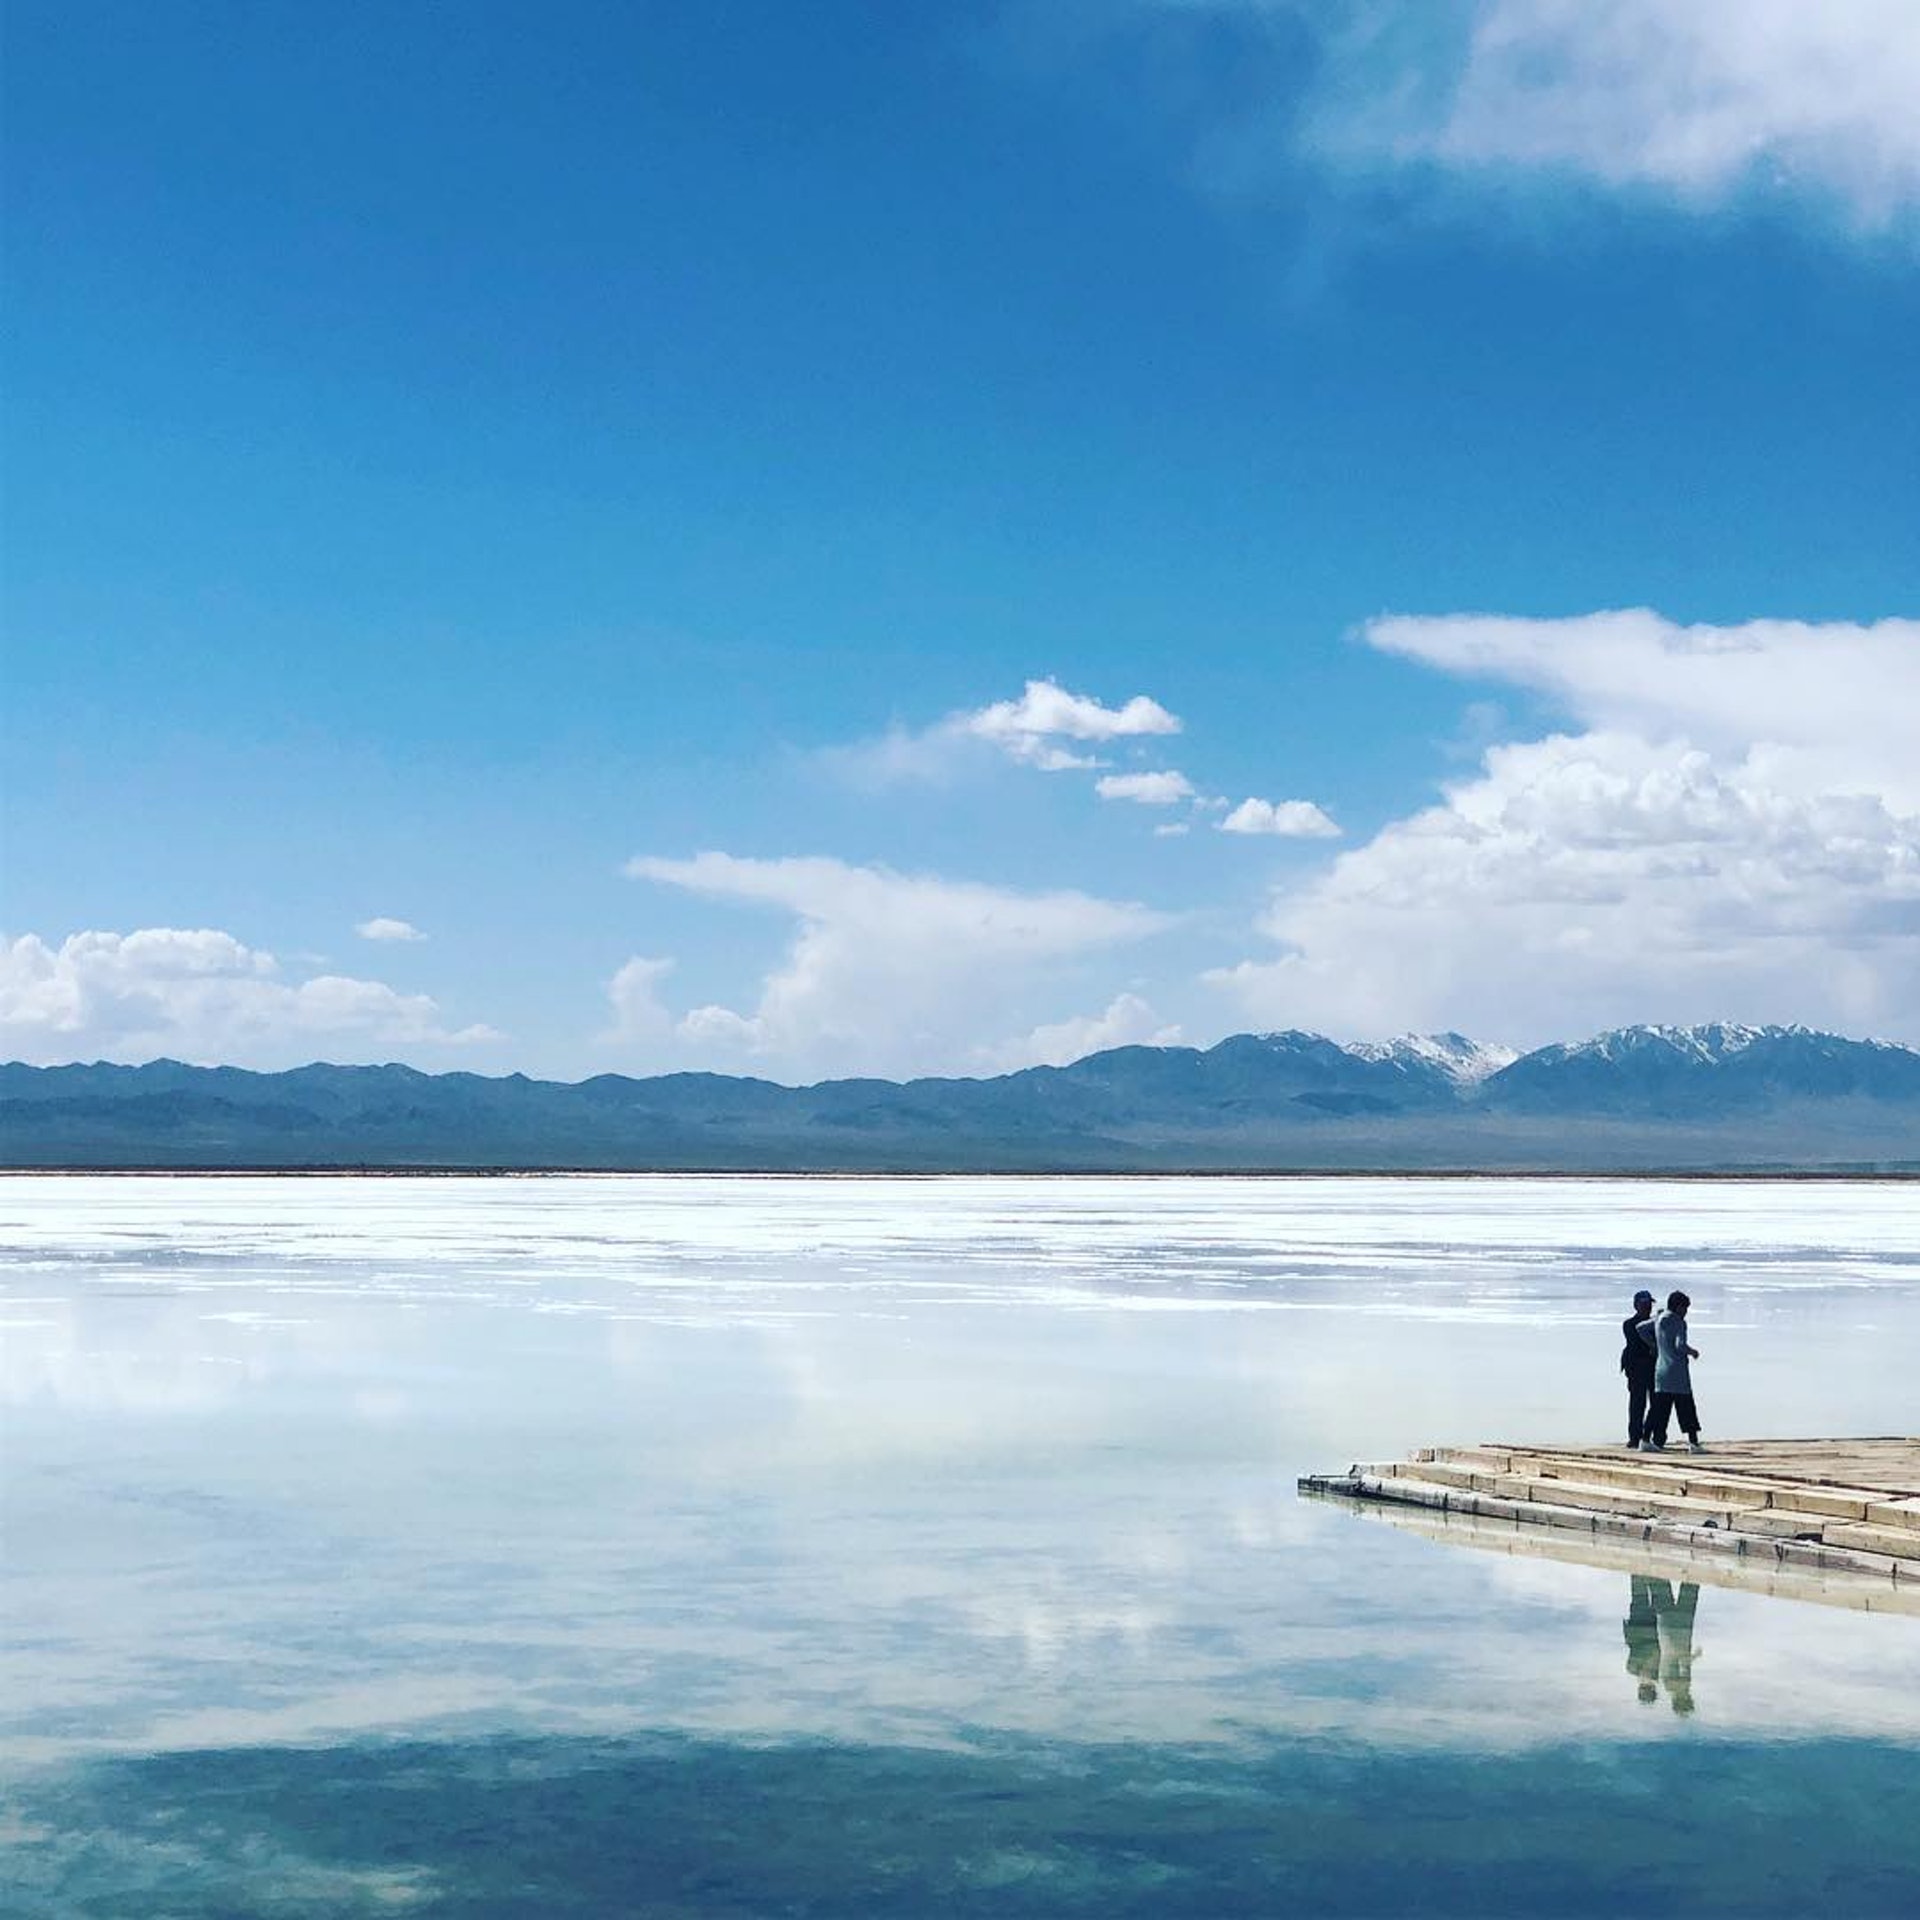 中國茶卡鹽湖（Instagram@thomaslchang）